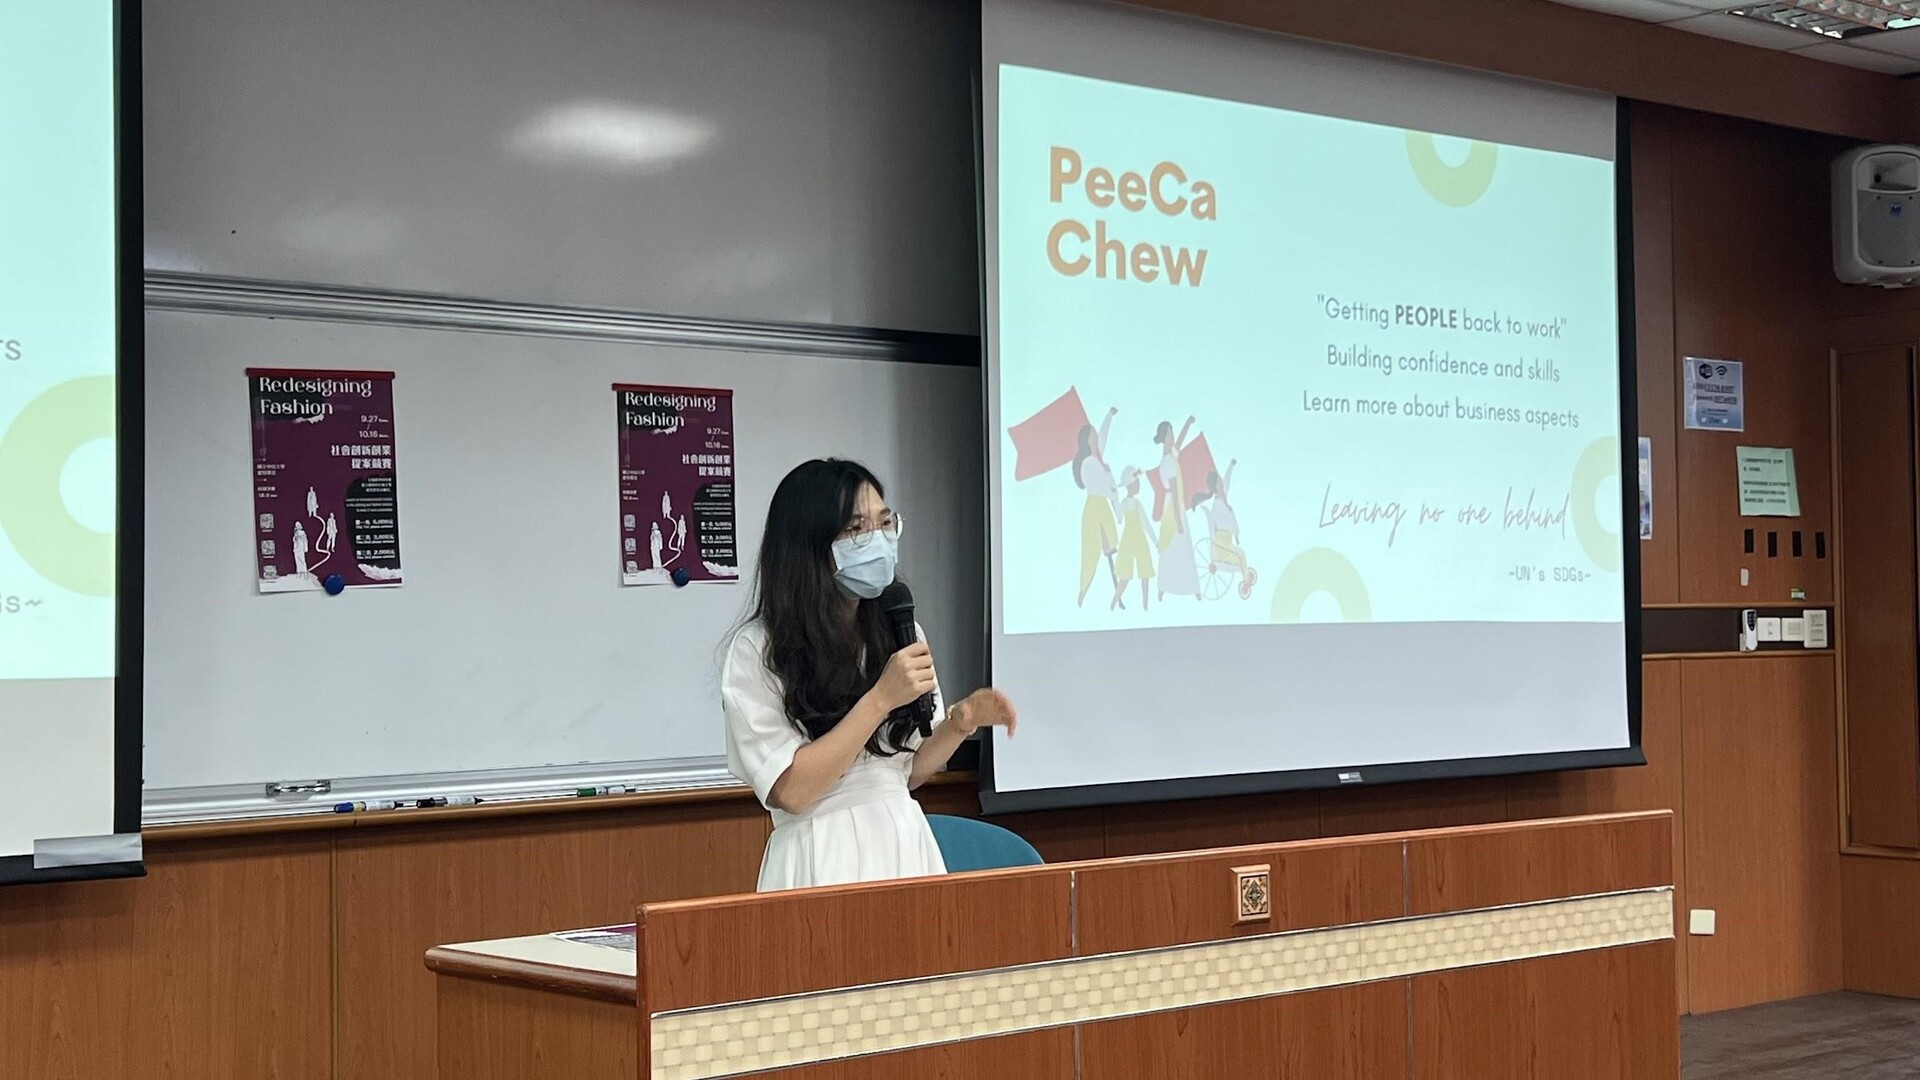 Kylie Nguyen introducing her team “PeeCa Chew”